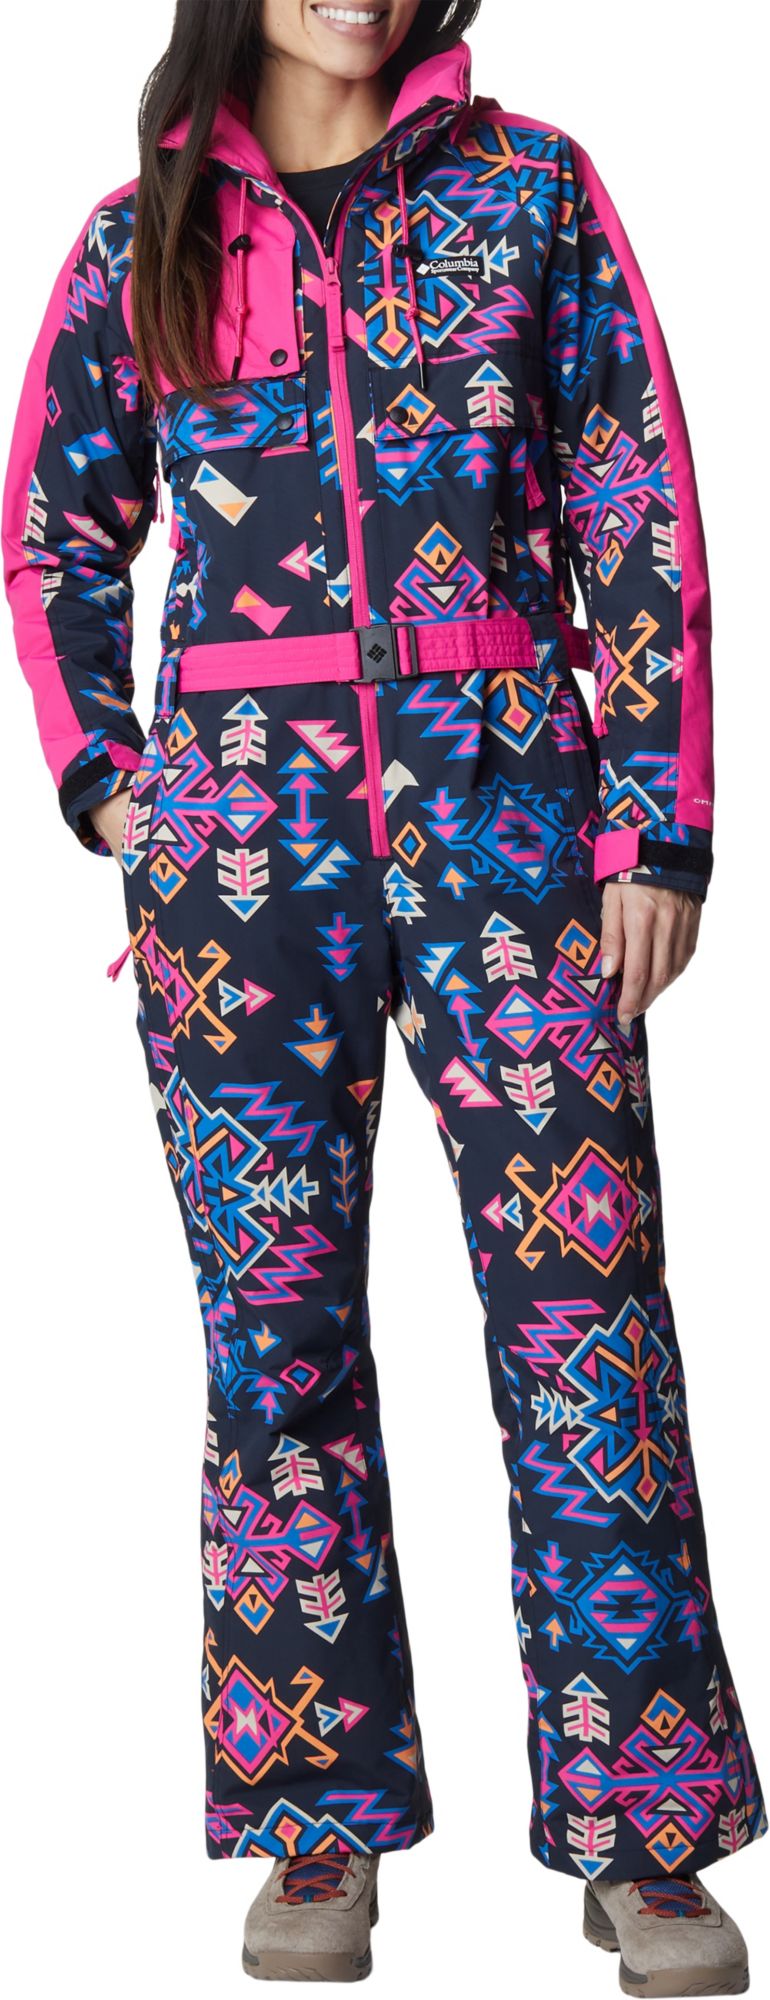 Photos - Ski Wear Columbia Women's Wintertrainer Snowsuit, Large, Blck Nature Print/Fuschia 